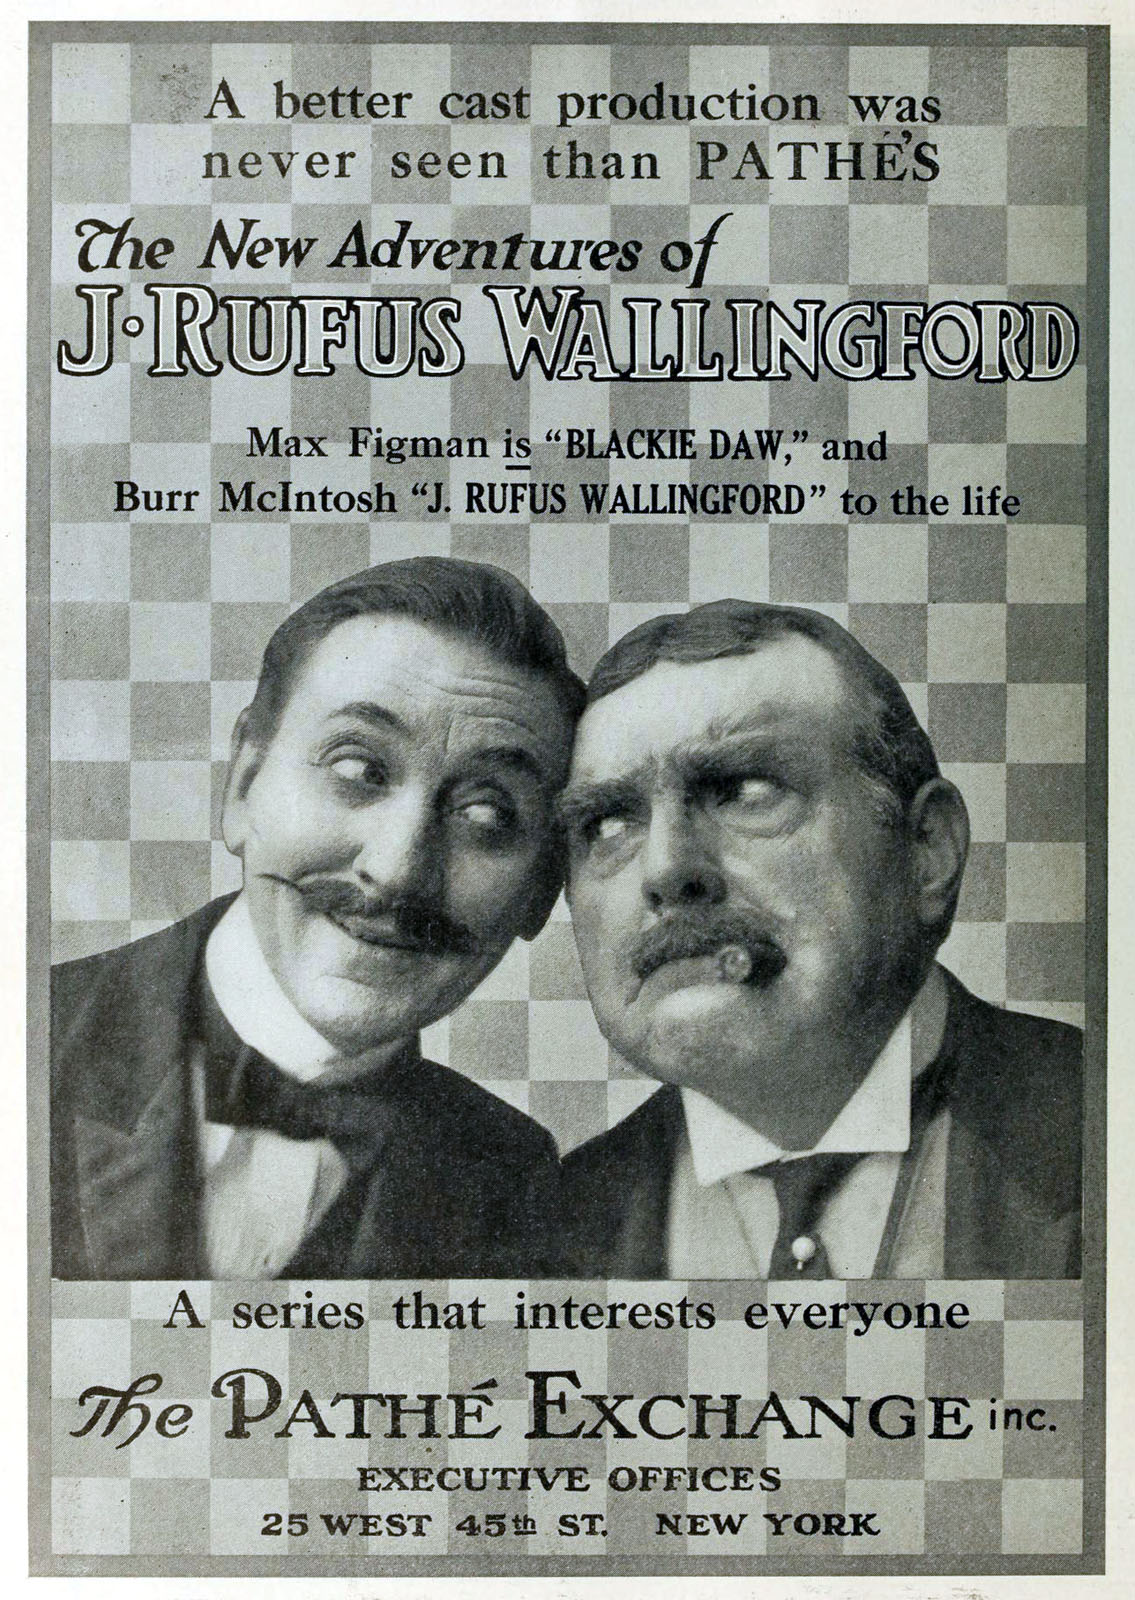 NEW ADVENTURES OF J. RUFUS WALLINGFORD